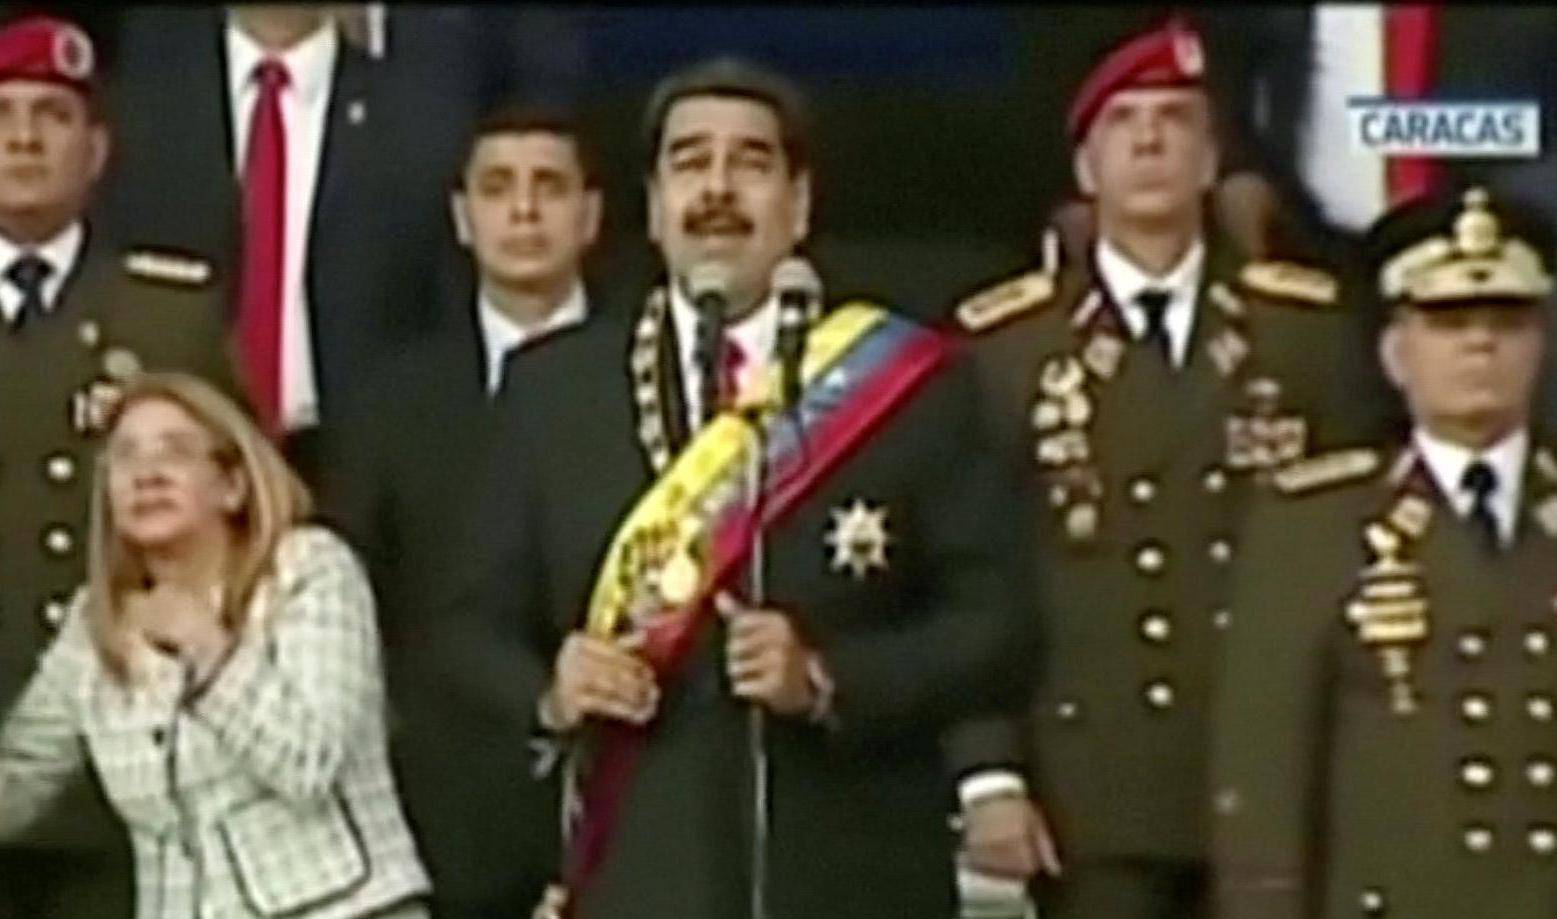 Venezuelan President Nicolas Maduro reacts during an event which was interrupted, in this still frame taken from video